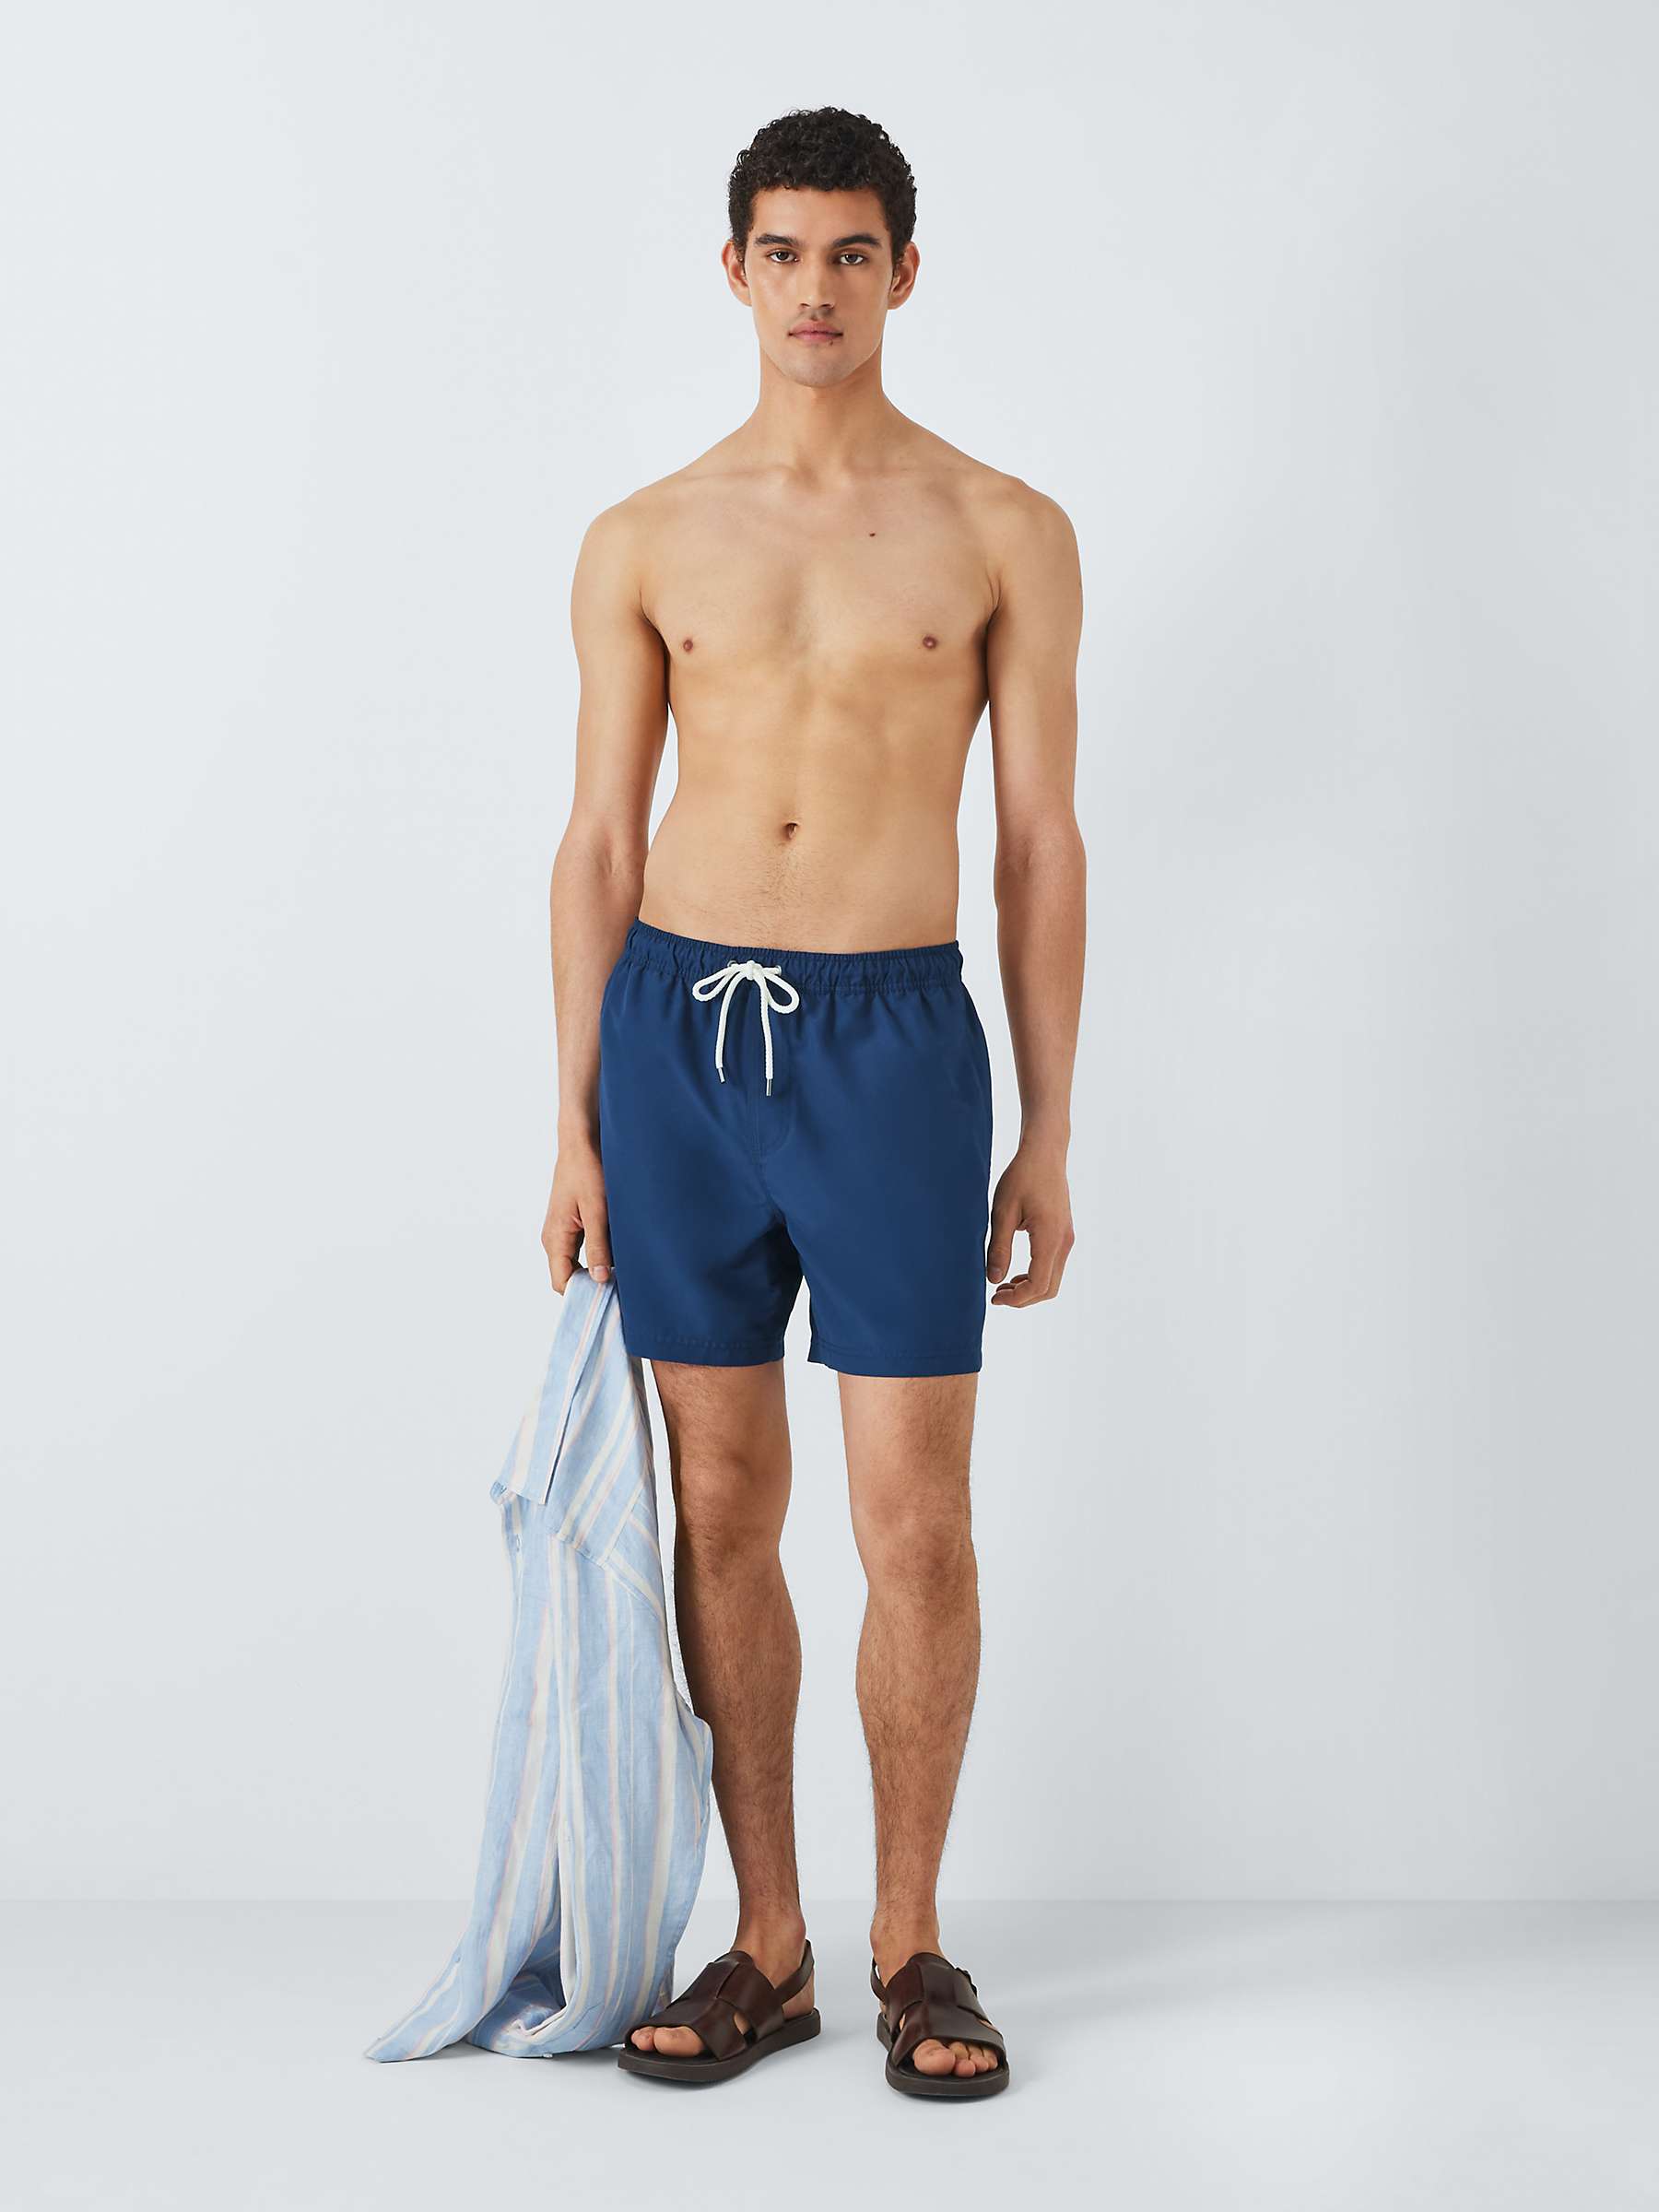 Buy John Lewis Recycled Polyester Swim Shorts, Navy Online at johnlewis.com